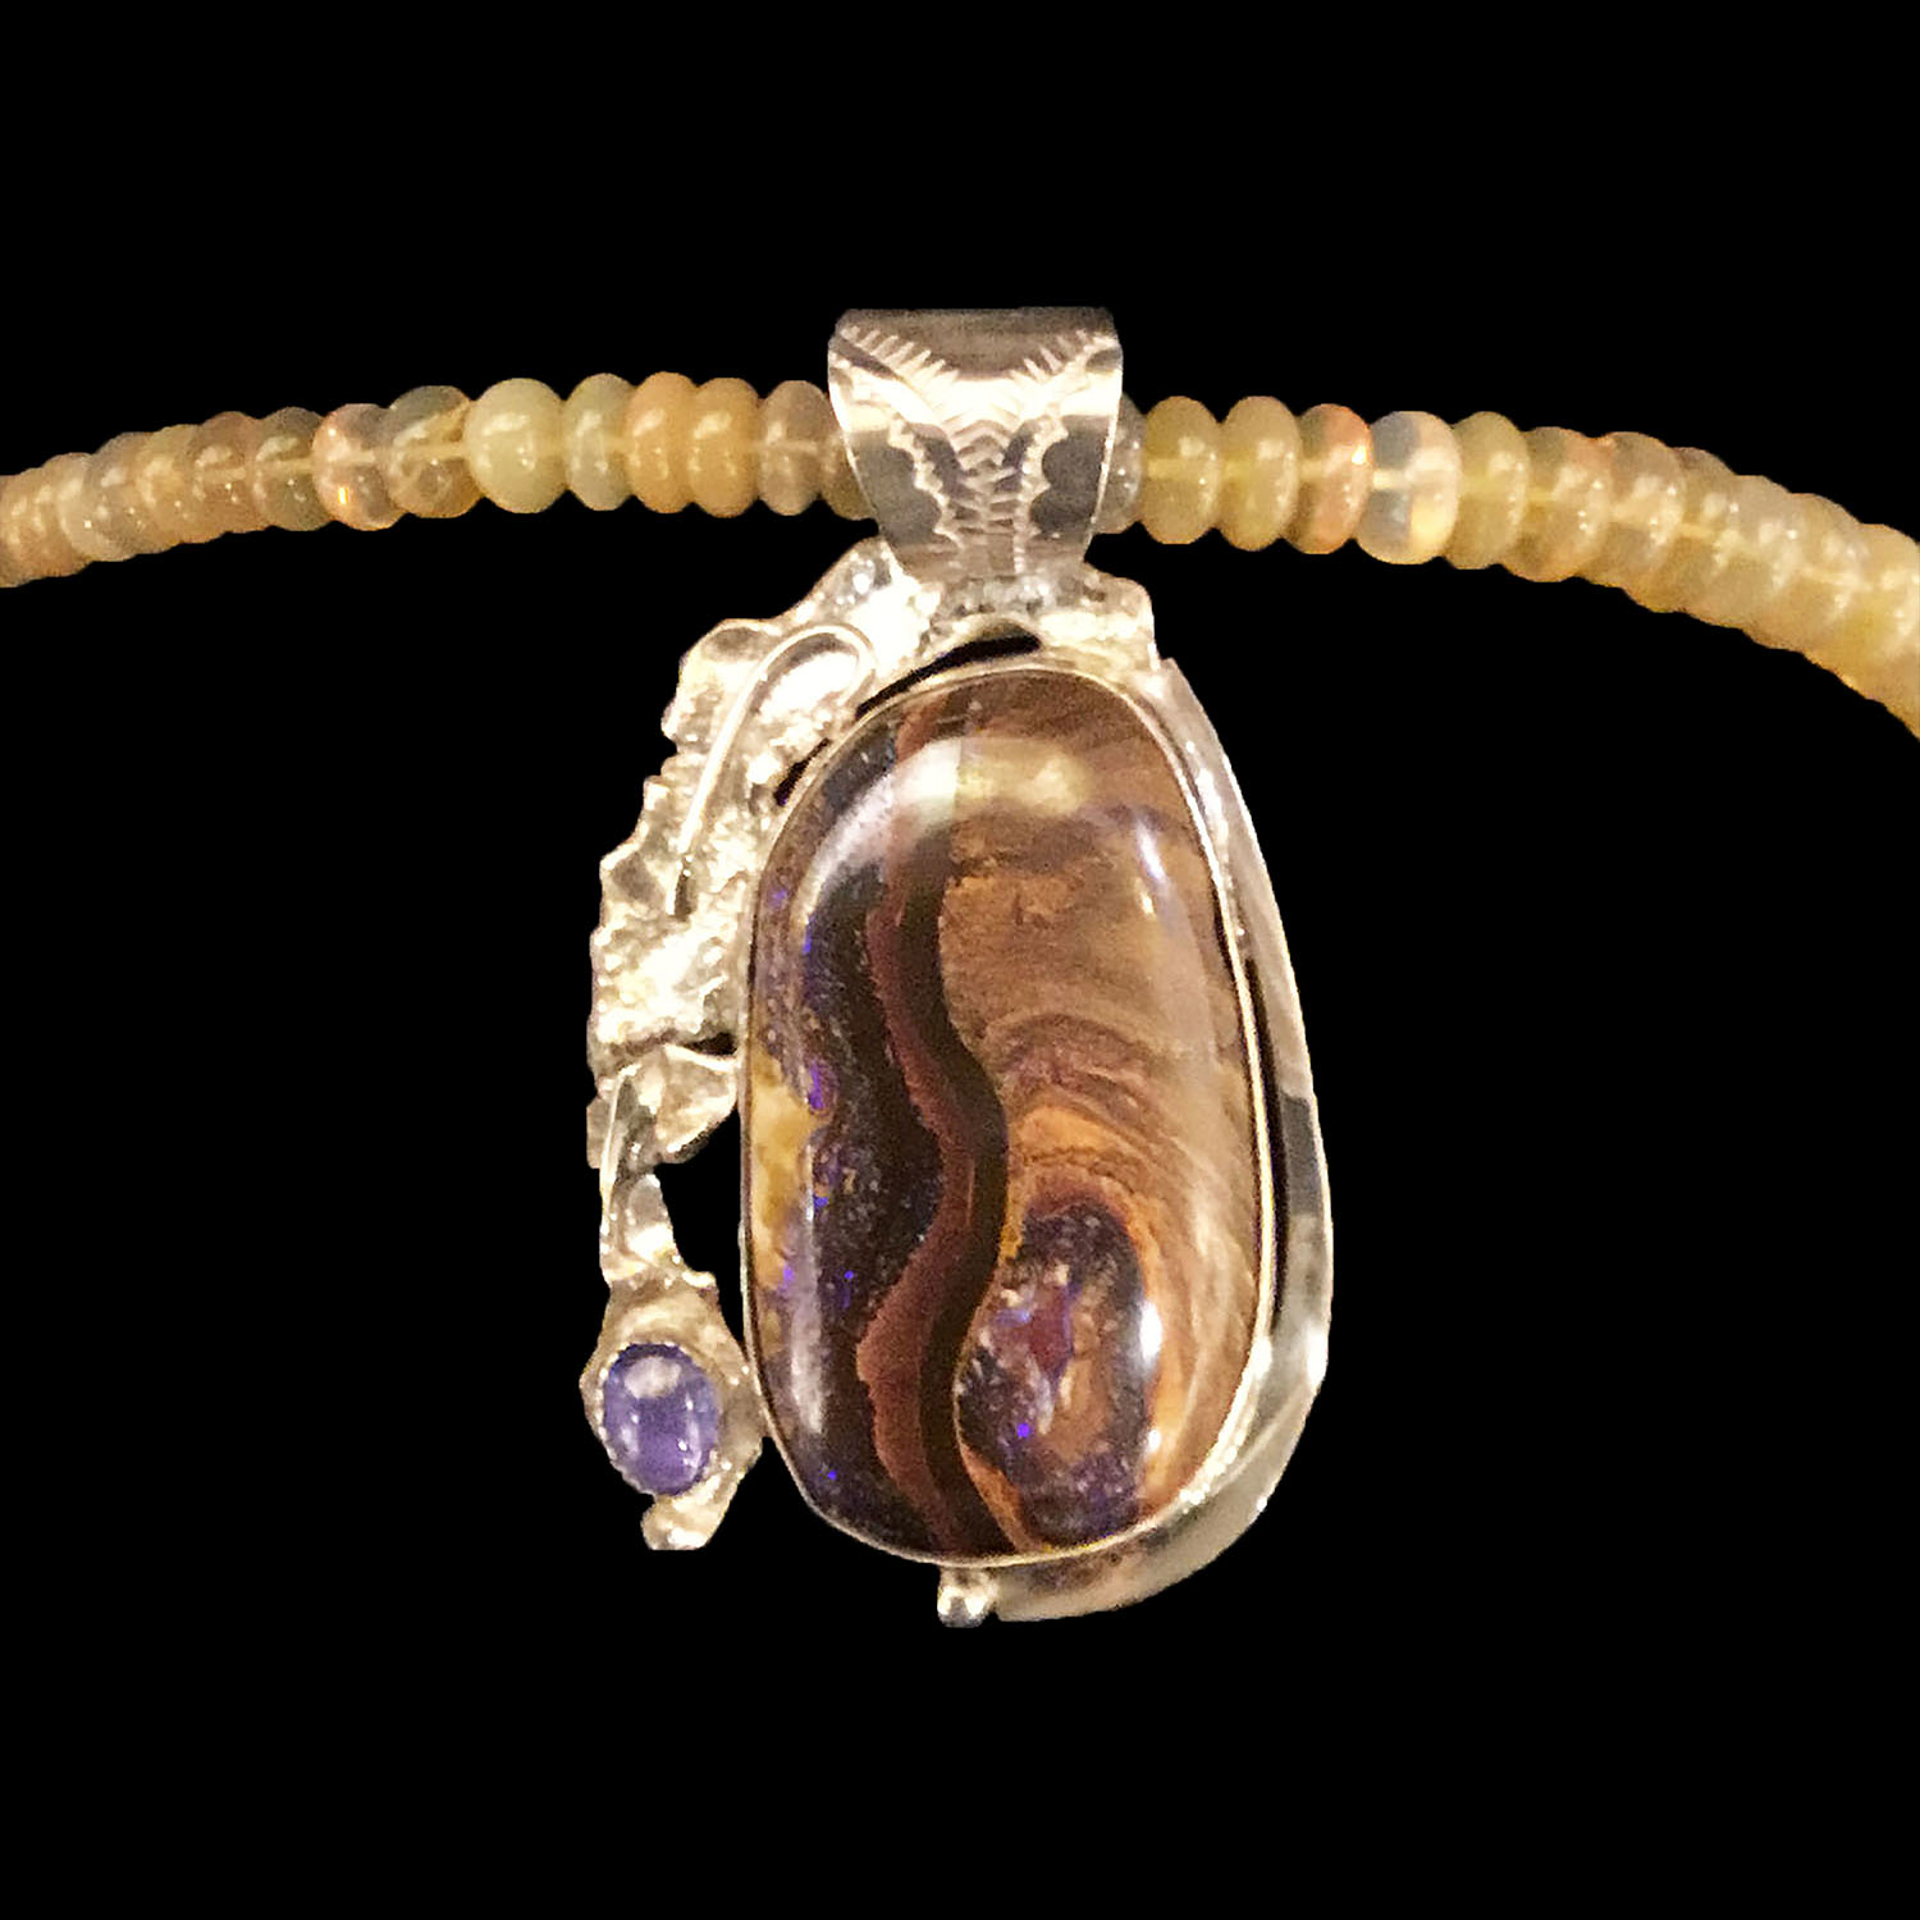 Boulder Opal +Tanzanite on agate beads by Michael Redhawk